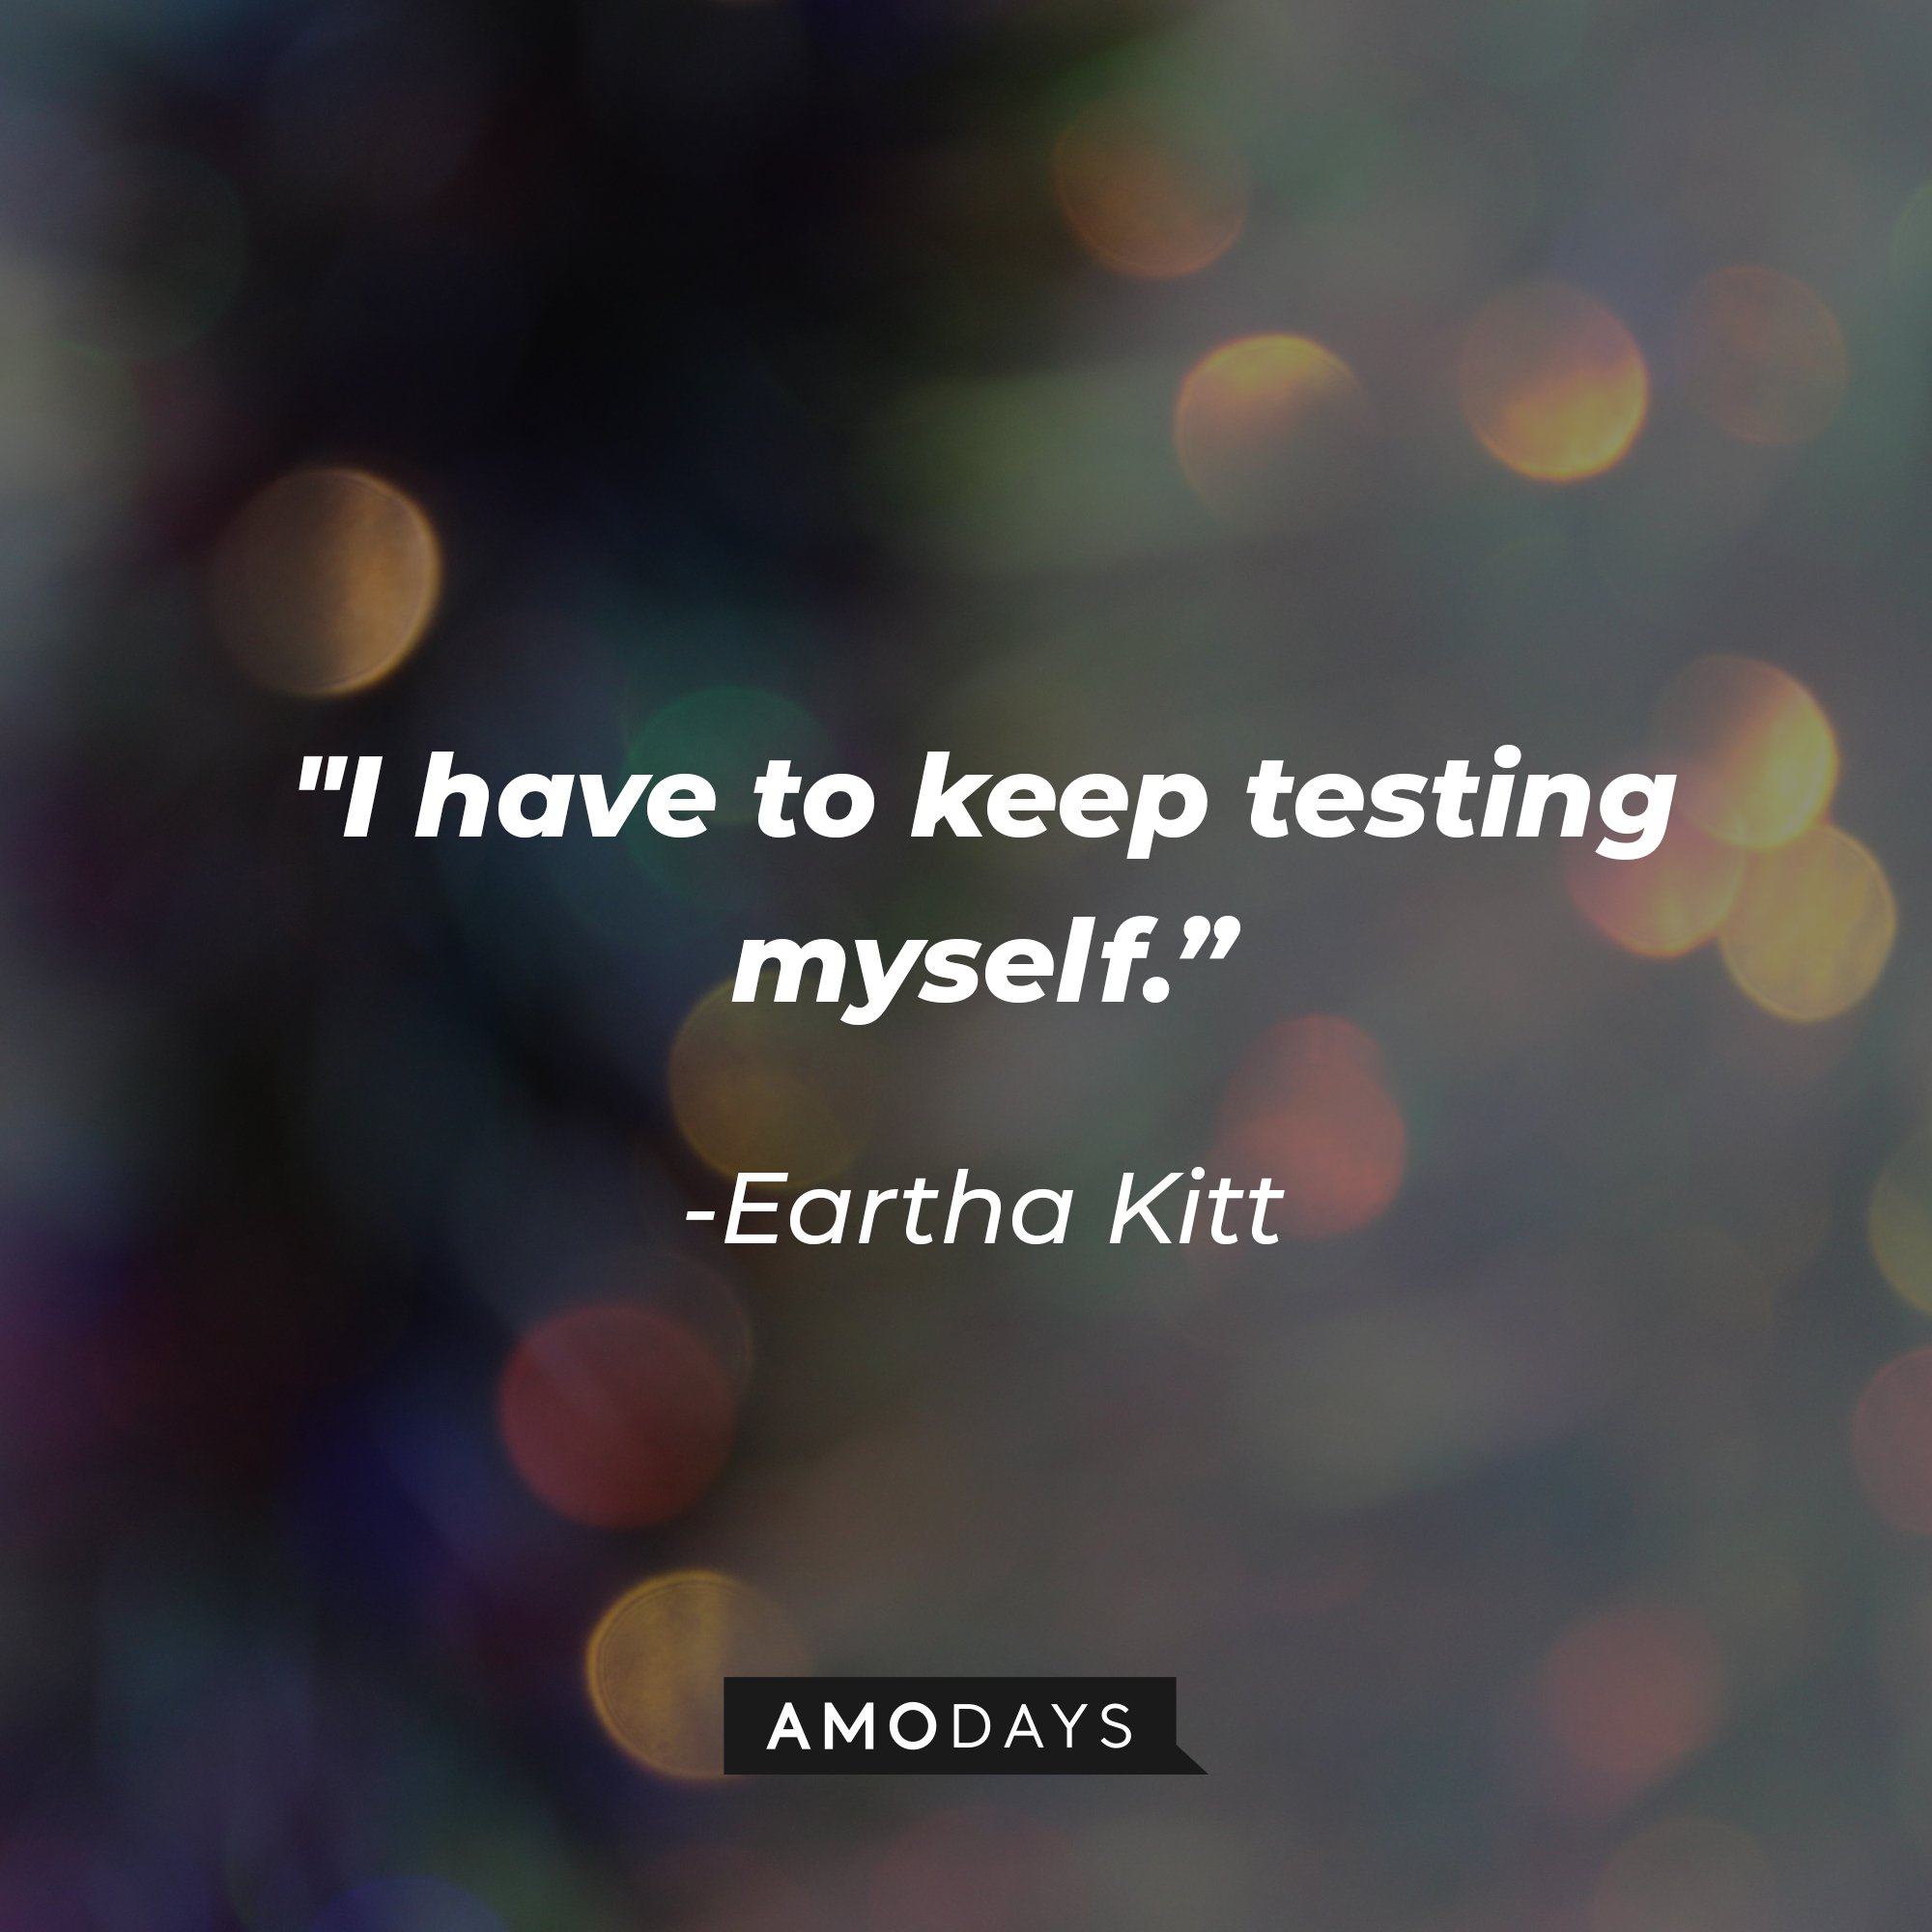 Eartha Kitt’s quote: "I have to keep testing myself." | Image: AmoDays